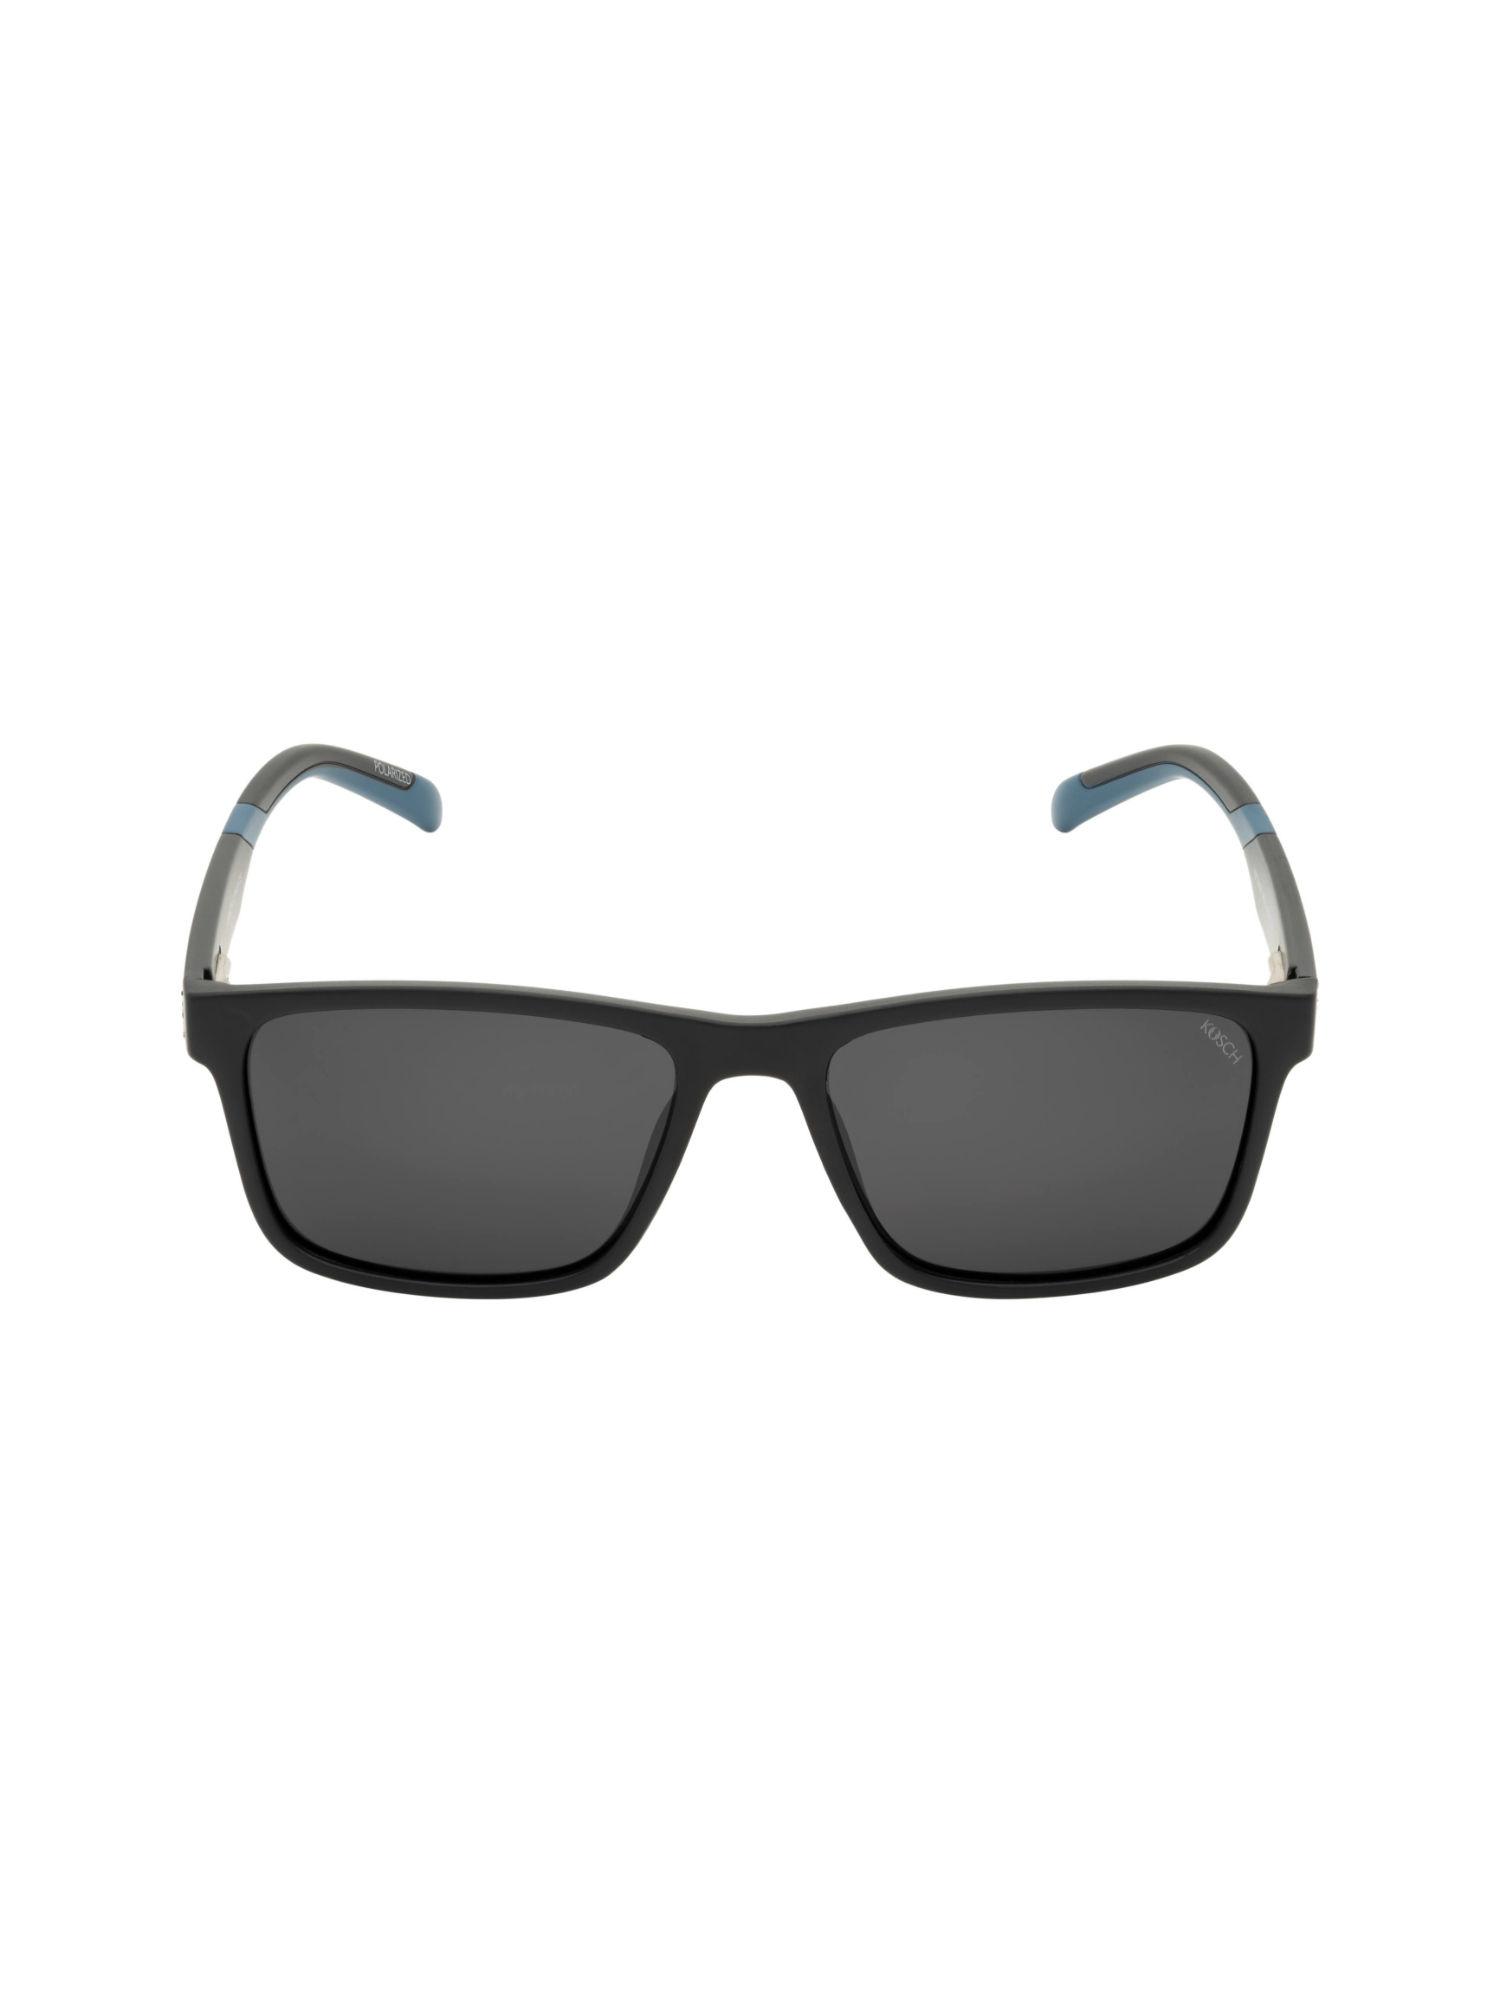 men black grey rectangle shape sunglasses with polarised lenses